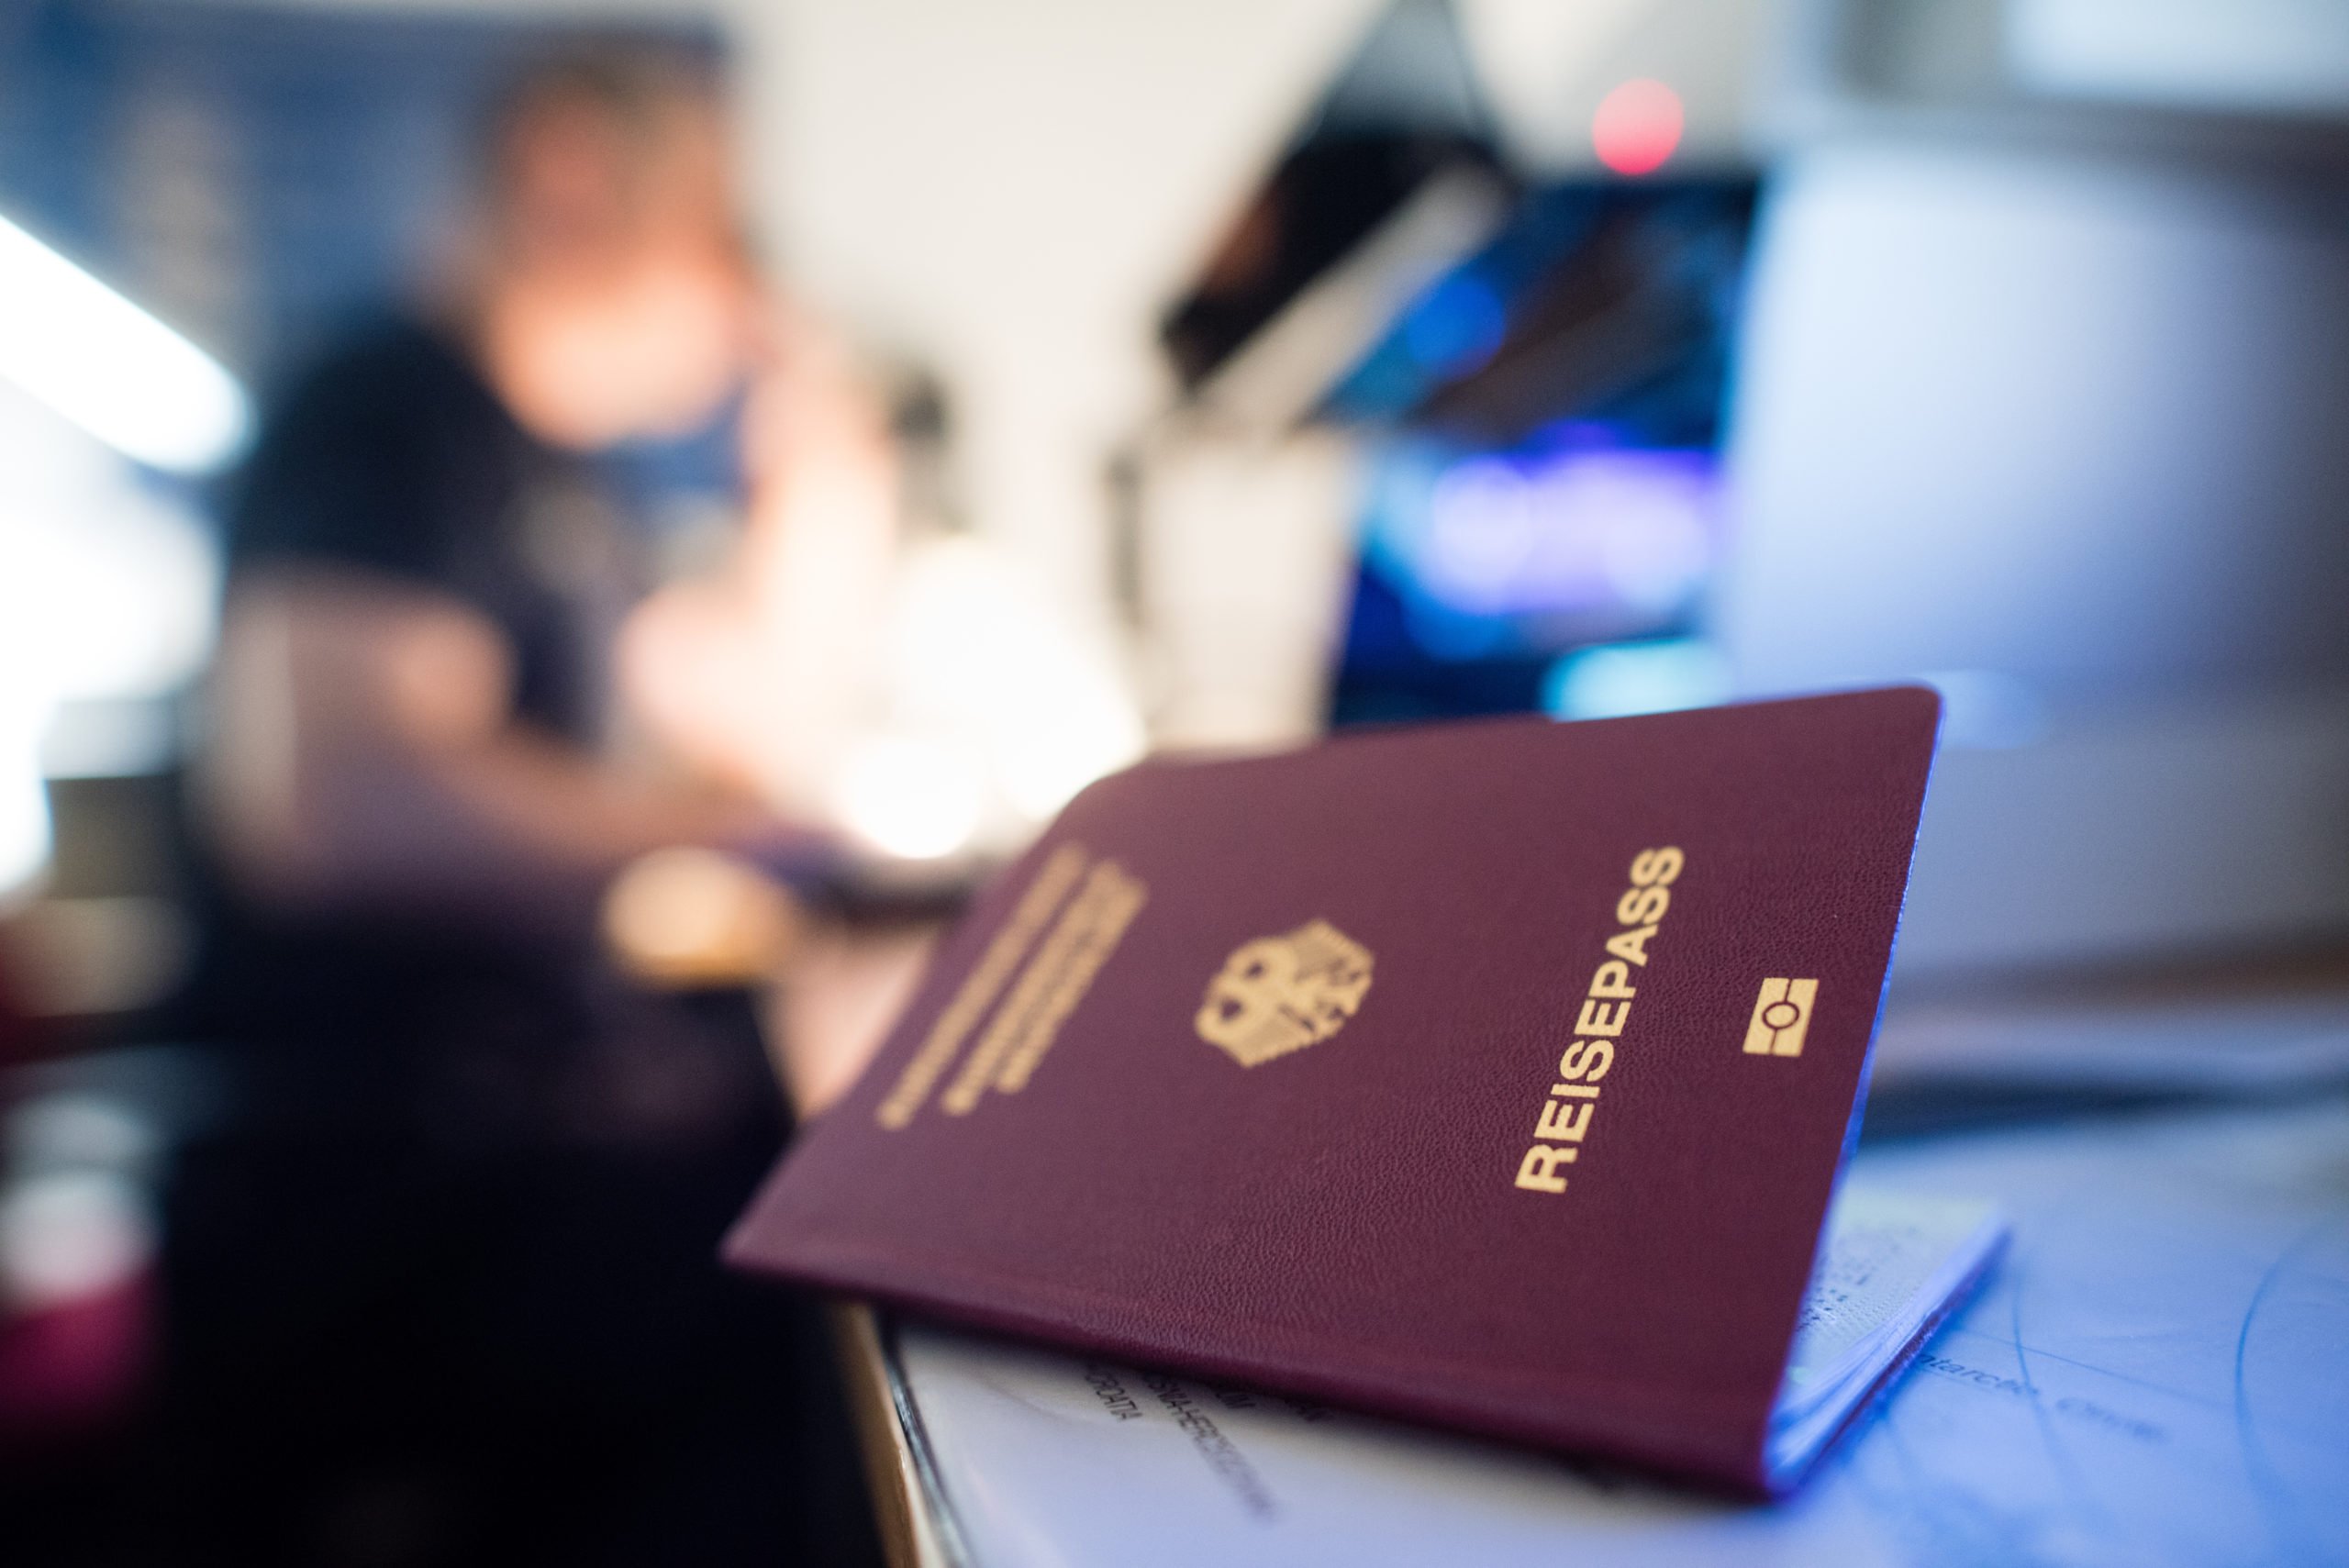 Passeport allemand